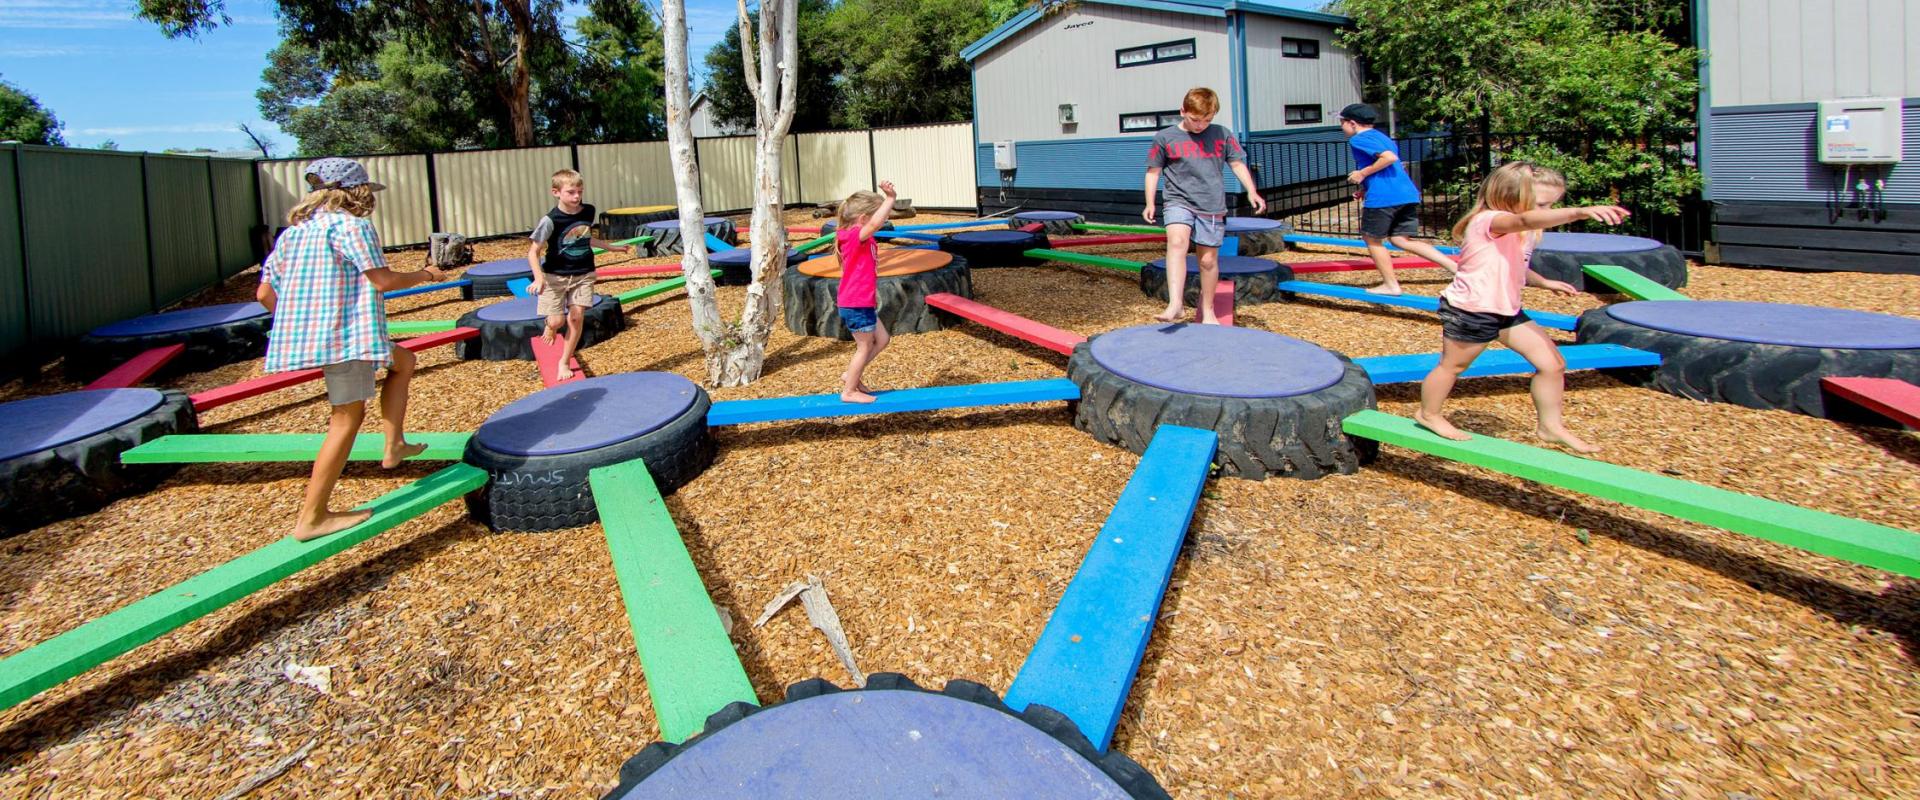 BIG4 Shepparton Park Lane Holiday Park - Kids playing on tyre maze